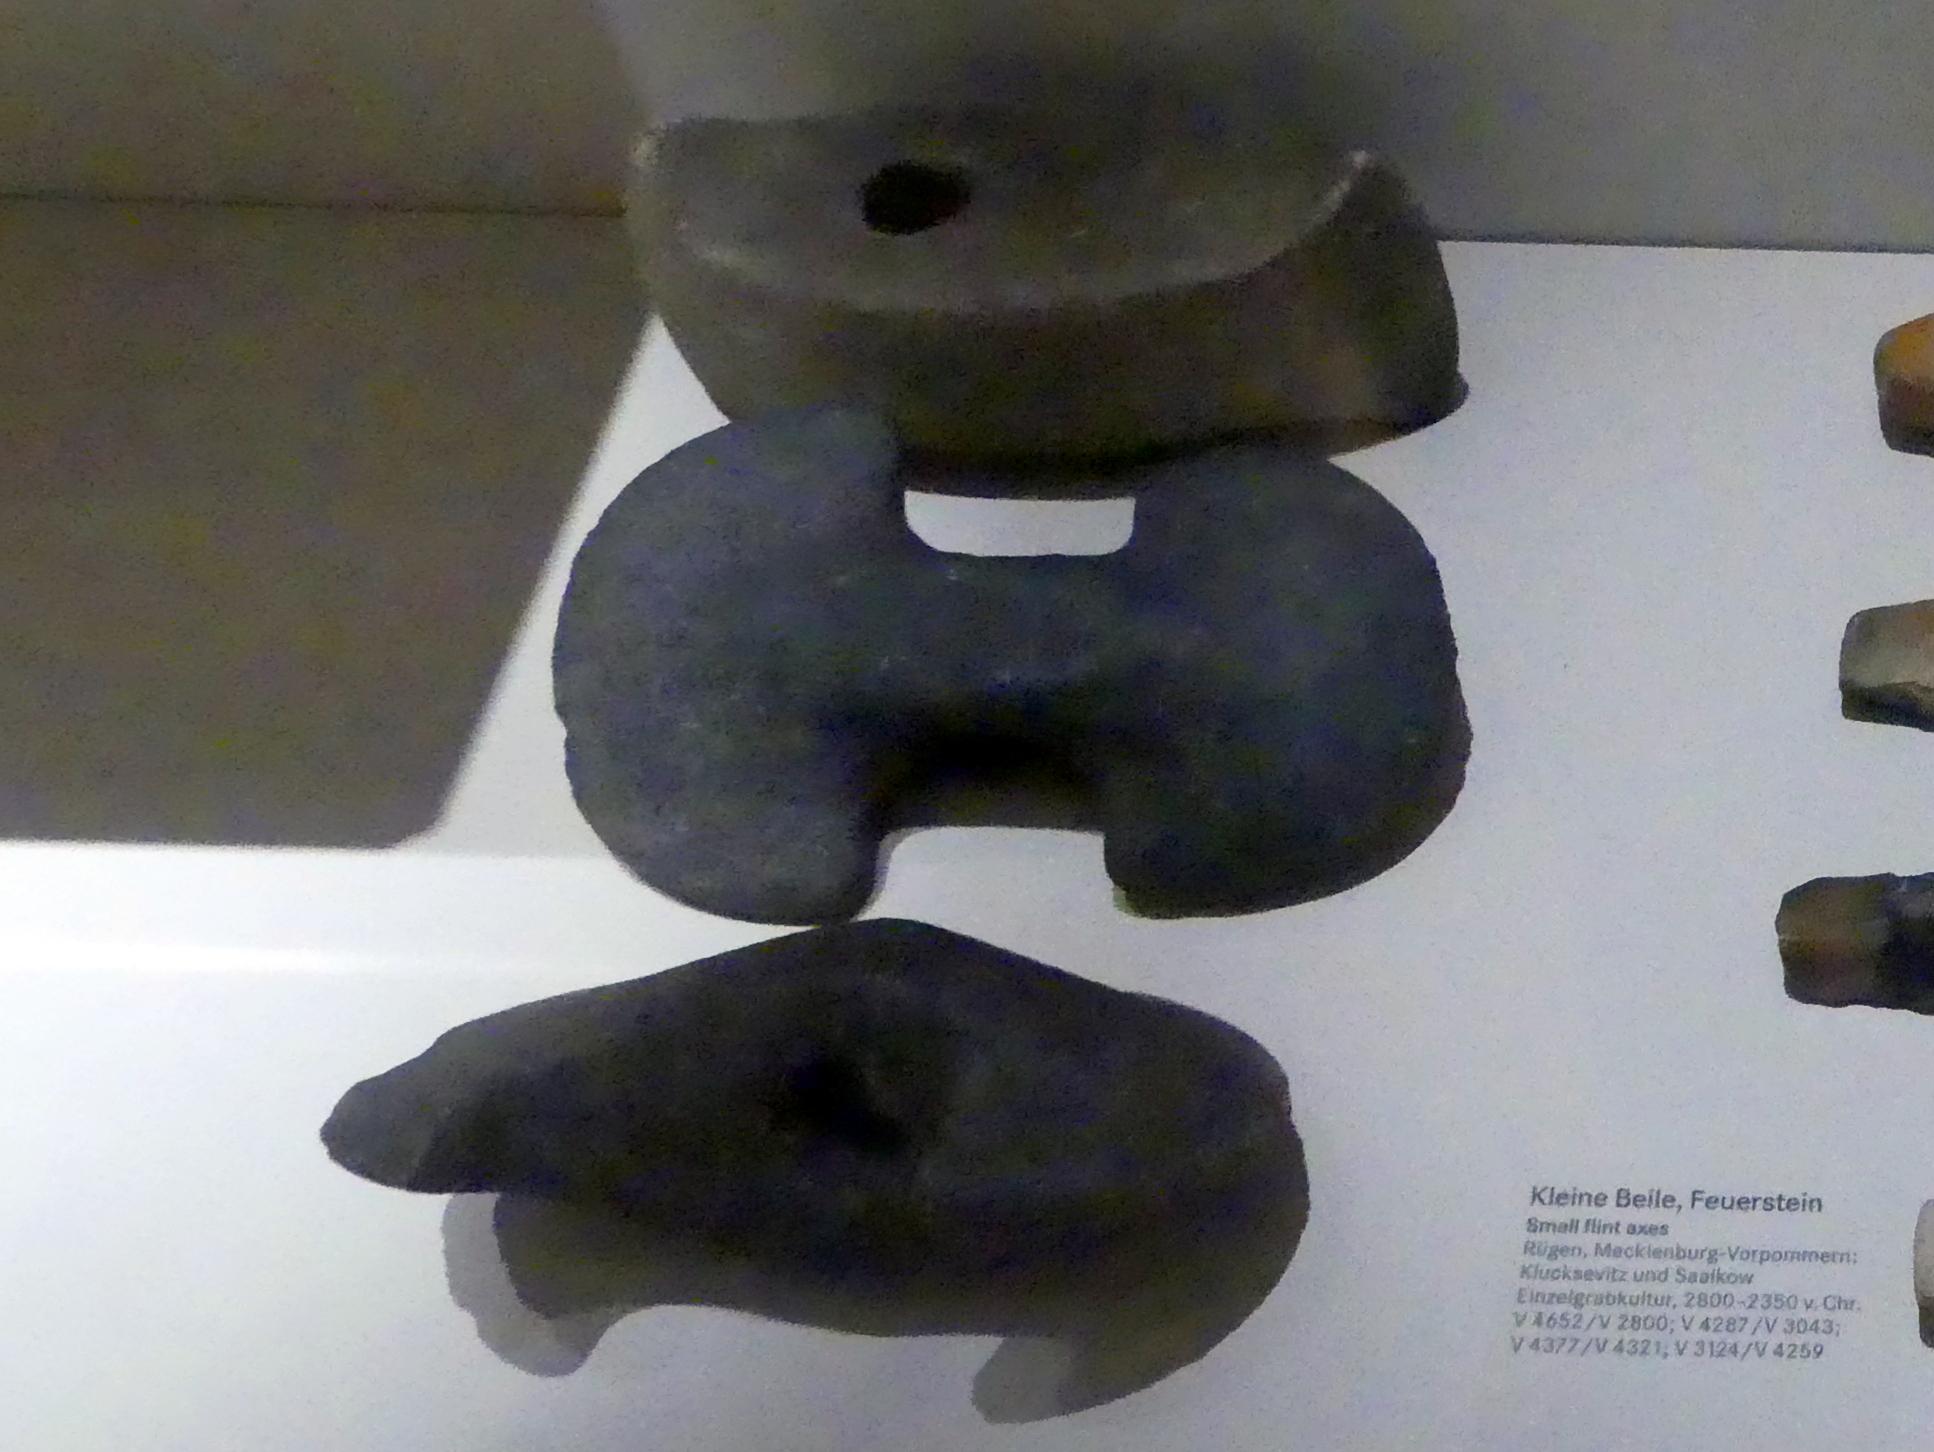 Doppelaxt, Nordisches Neolithikum, 4400 - 2350 v. Chr., 2800 - 2350 v. Chr.